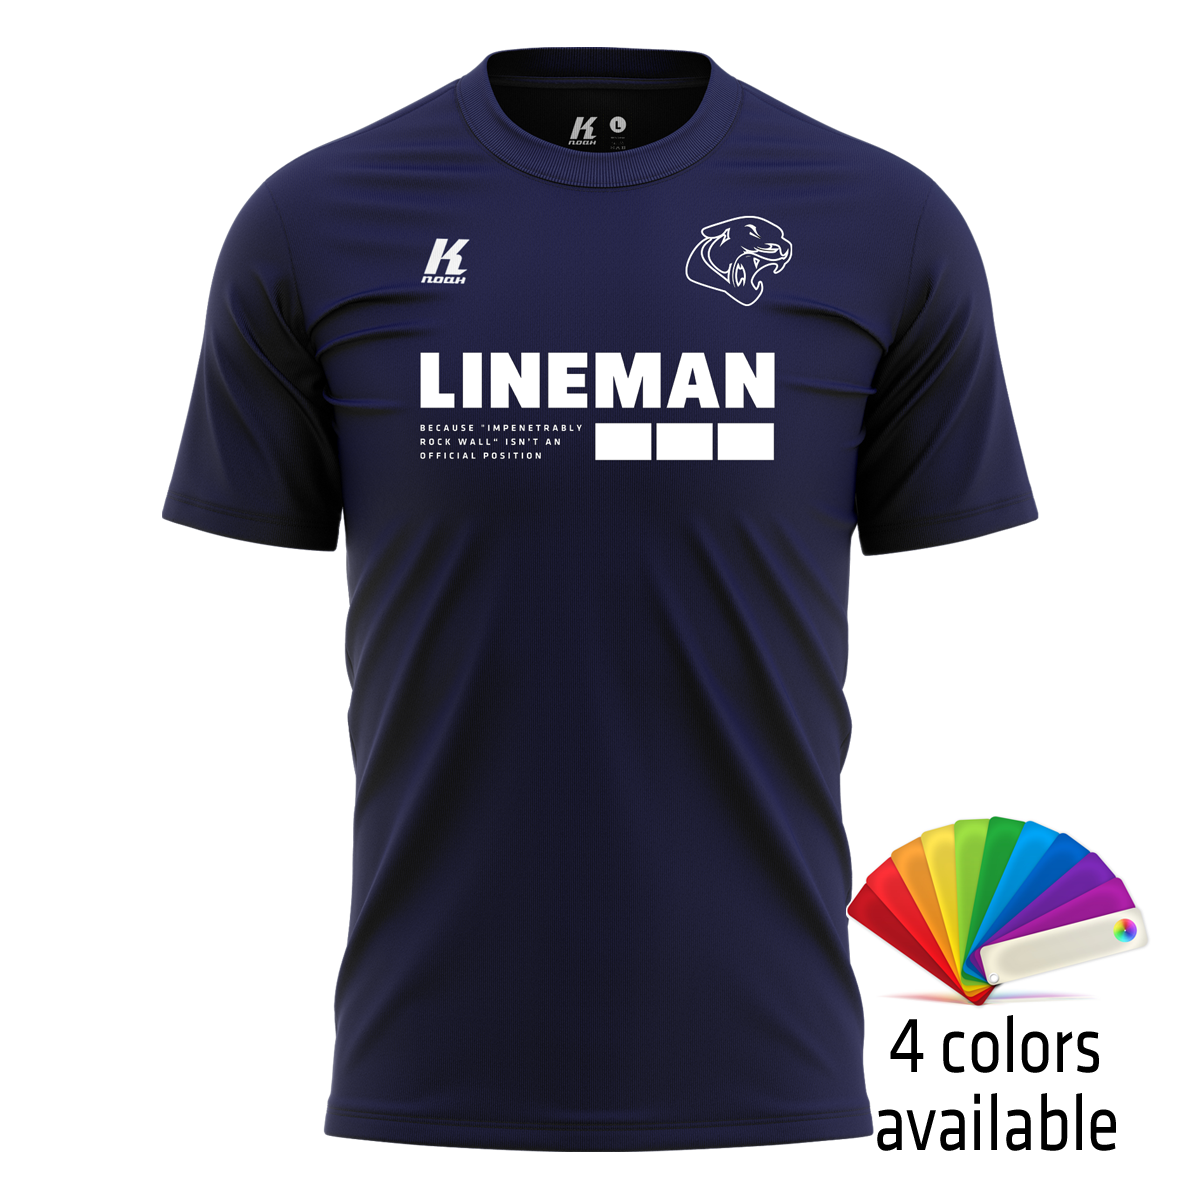 Cougars Footballmary T-Shirt "Lineman"